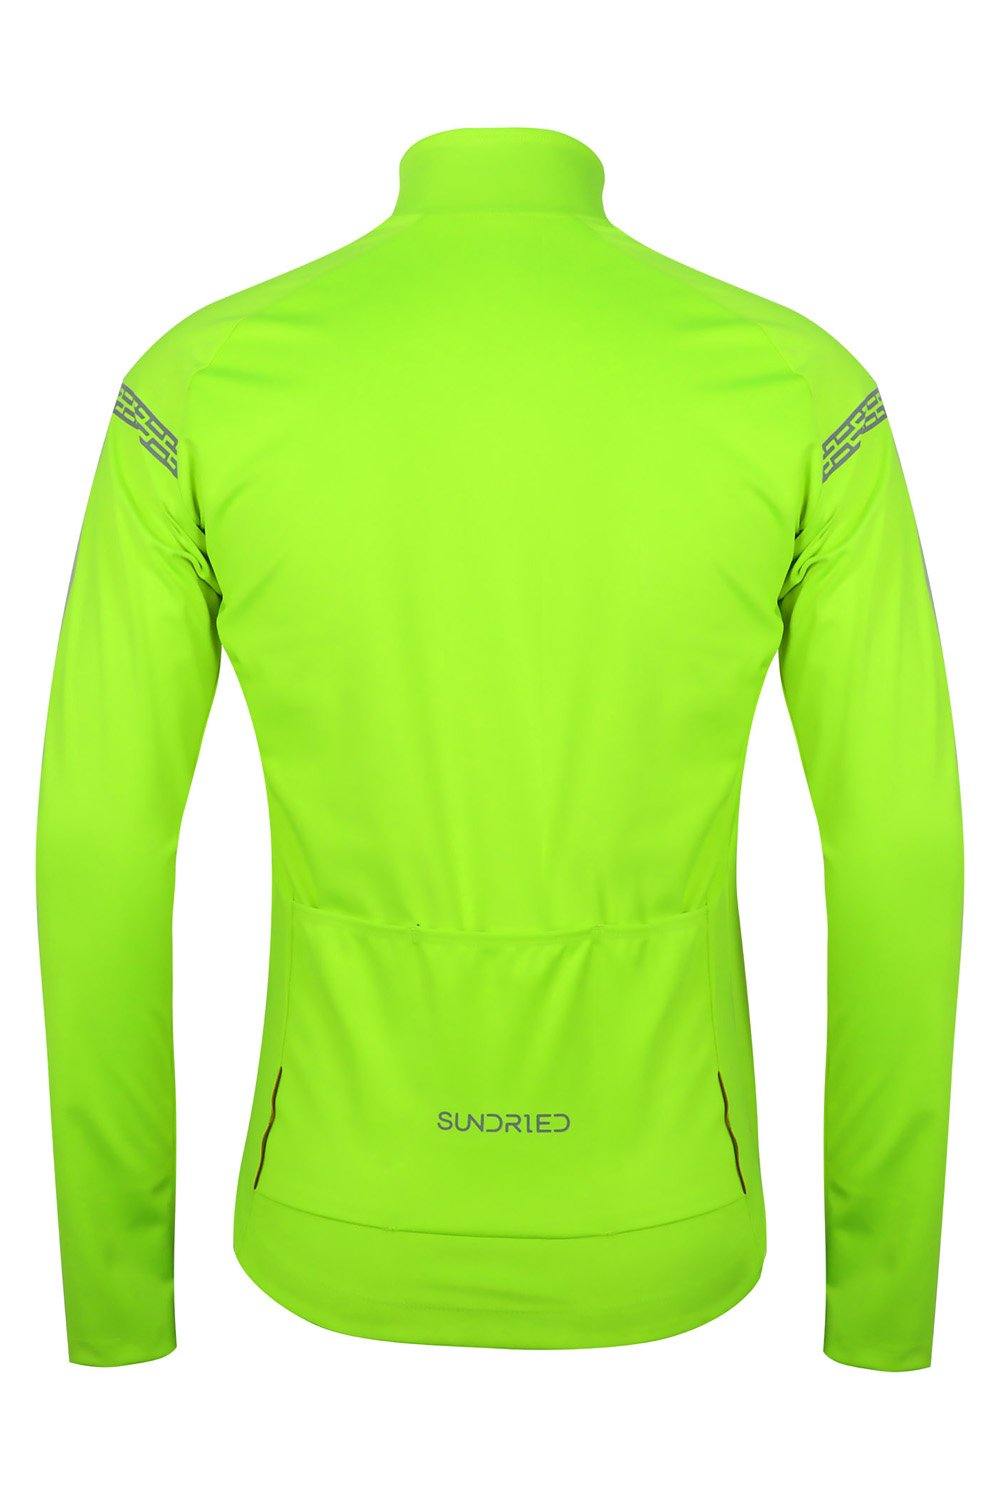 Sundried Equipe Men's Bike Jacket Cycle Jacket Activewear